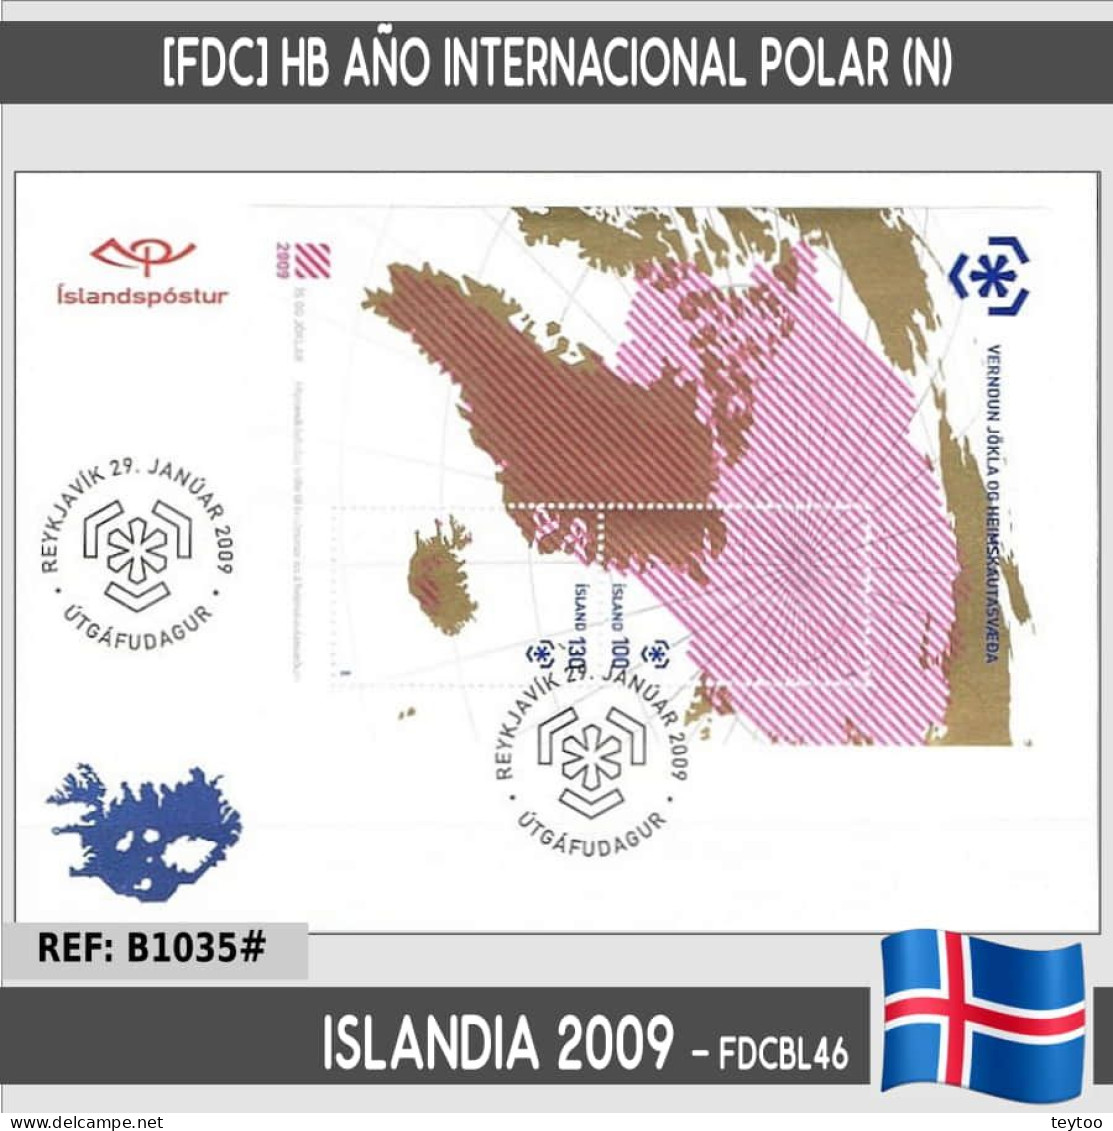 B1035# Islandia 2009 [FDC] HB Año Internacional Polar (N) - FDC